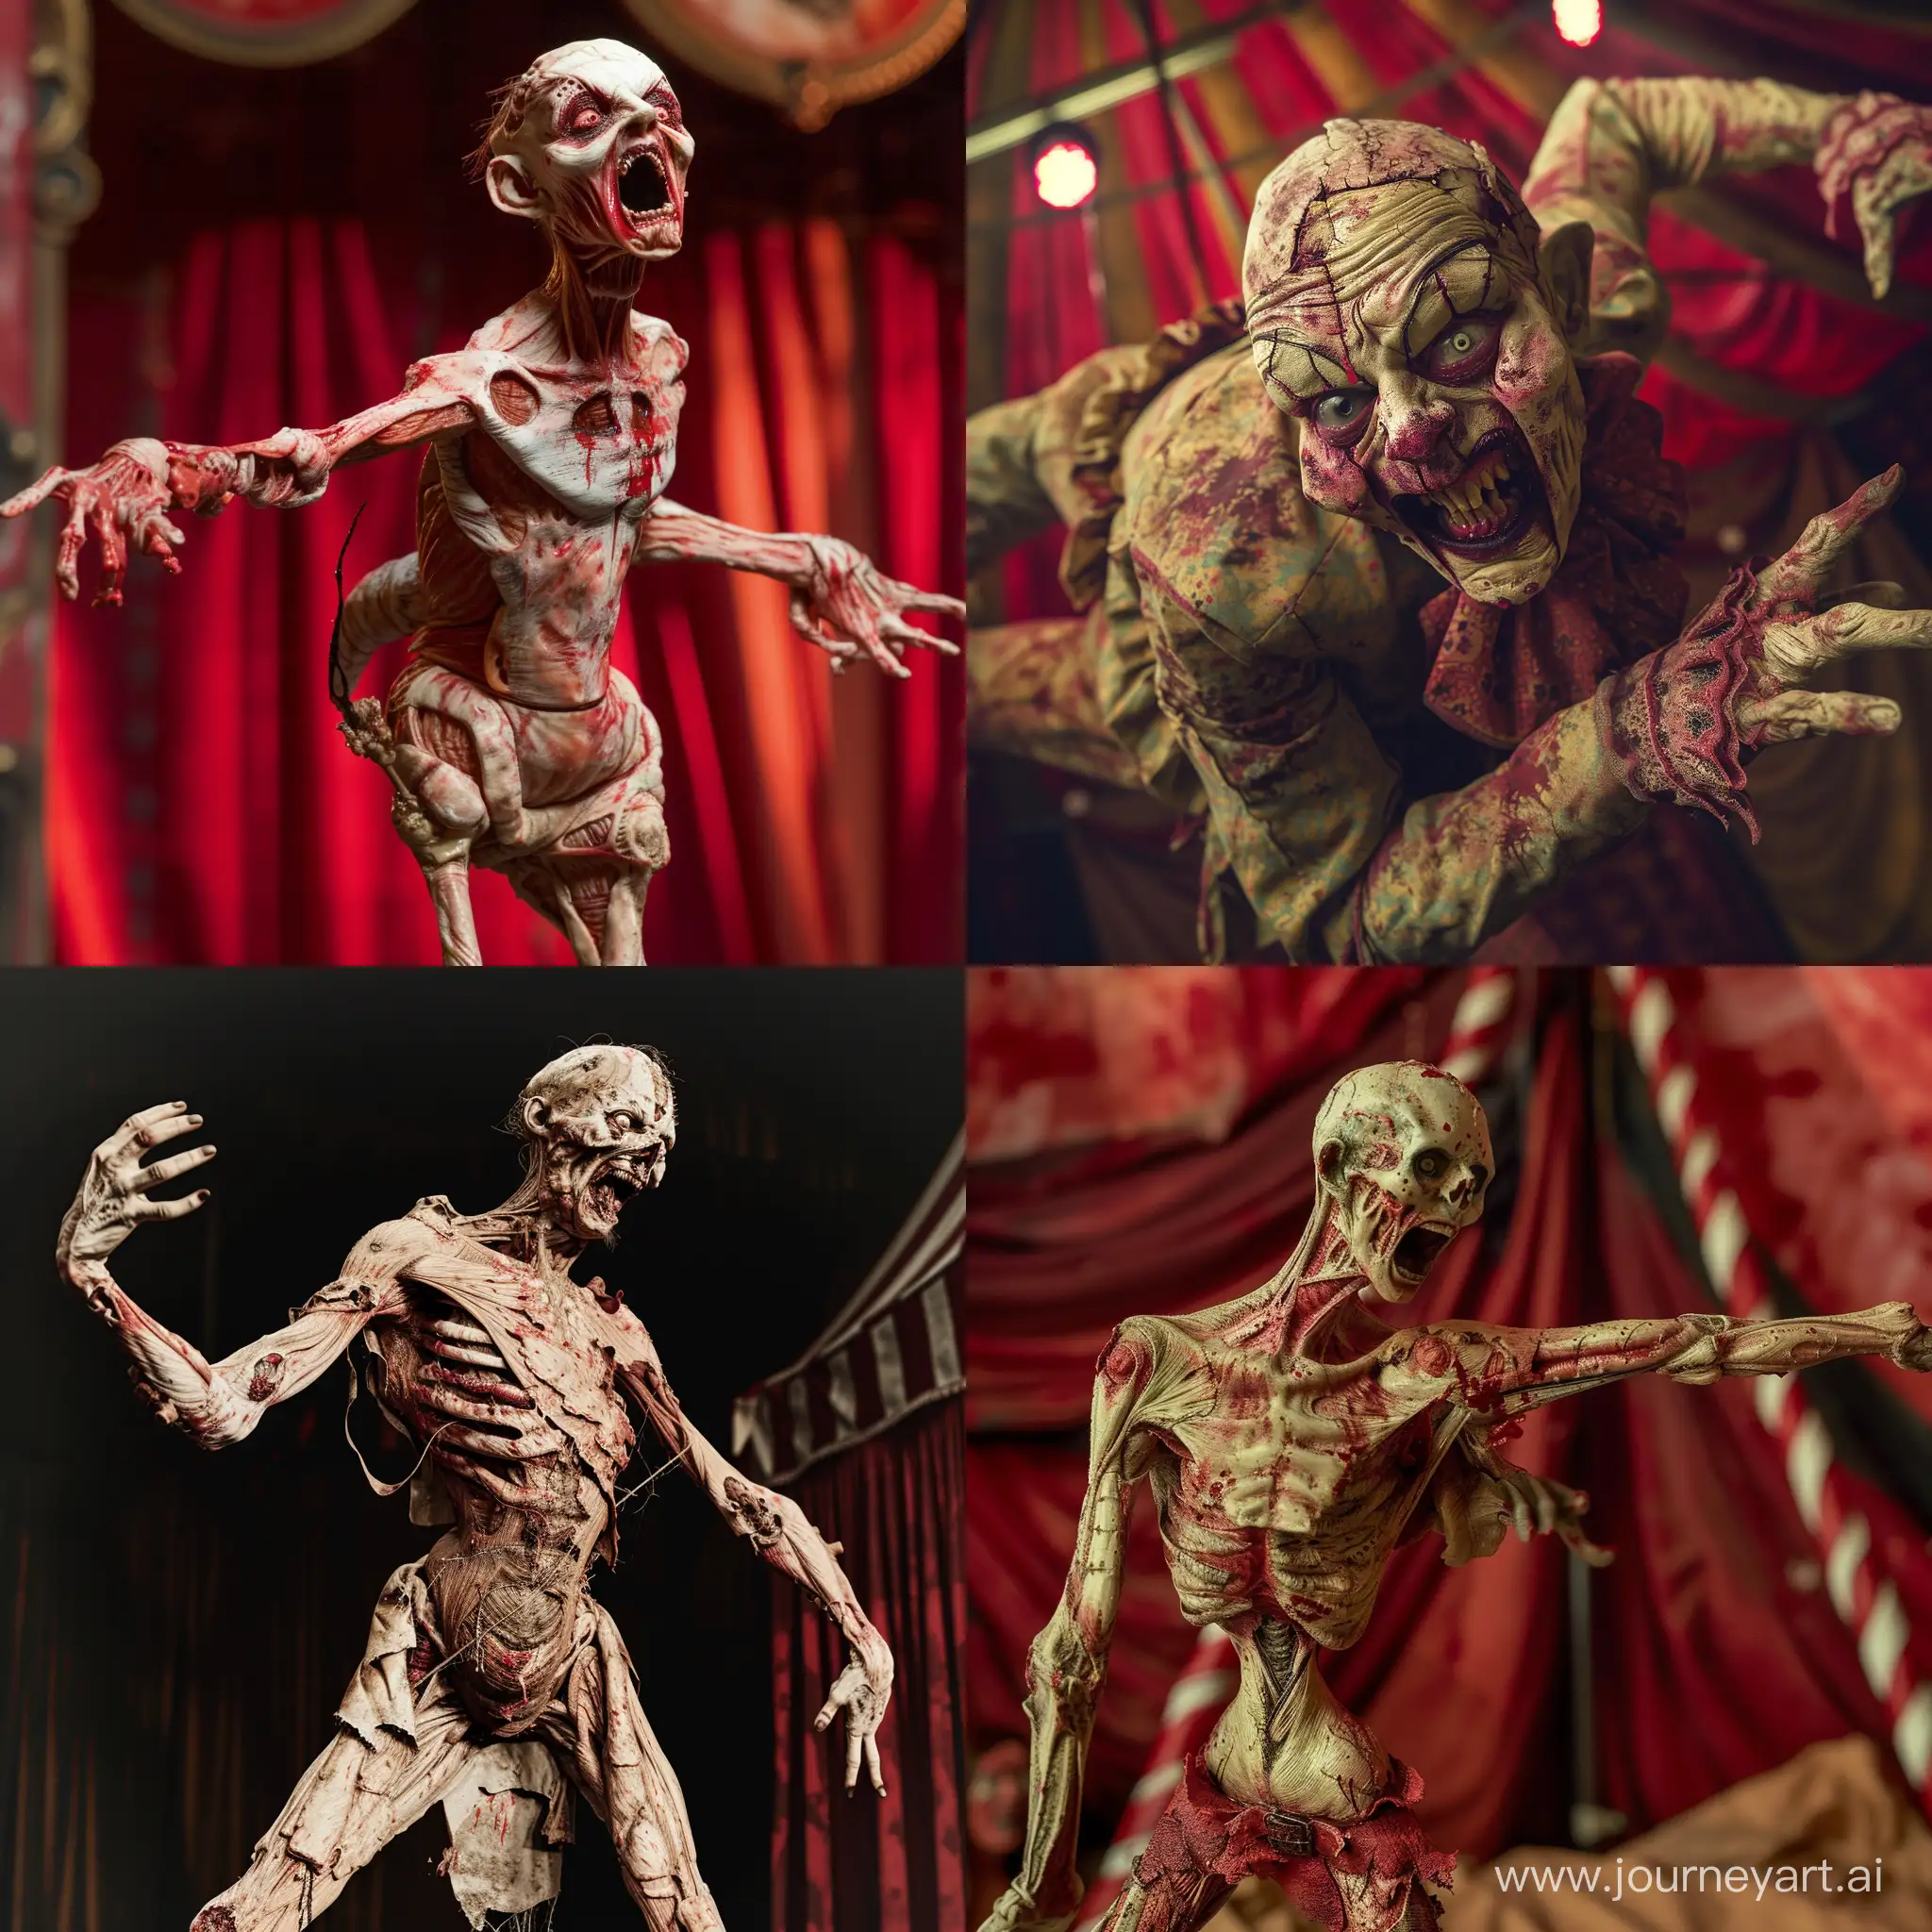 Grotesque-Performers-at-Sadistic-Body-Horror-Circus